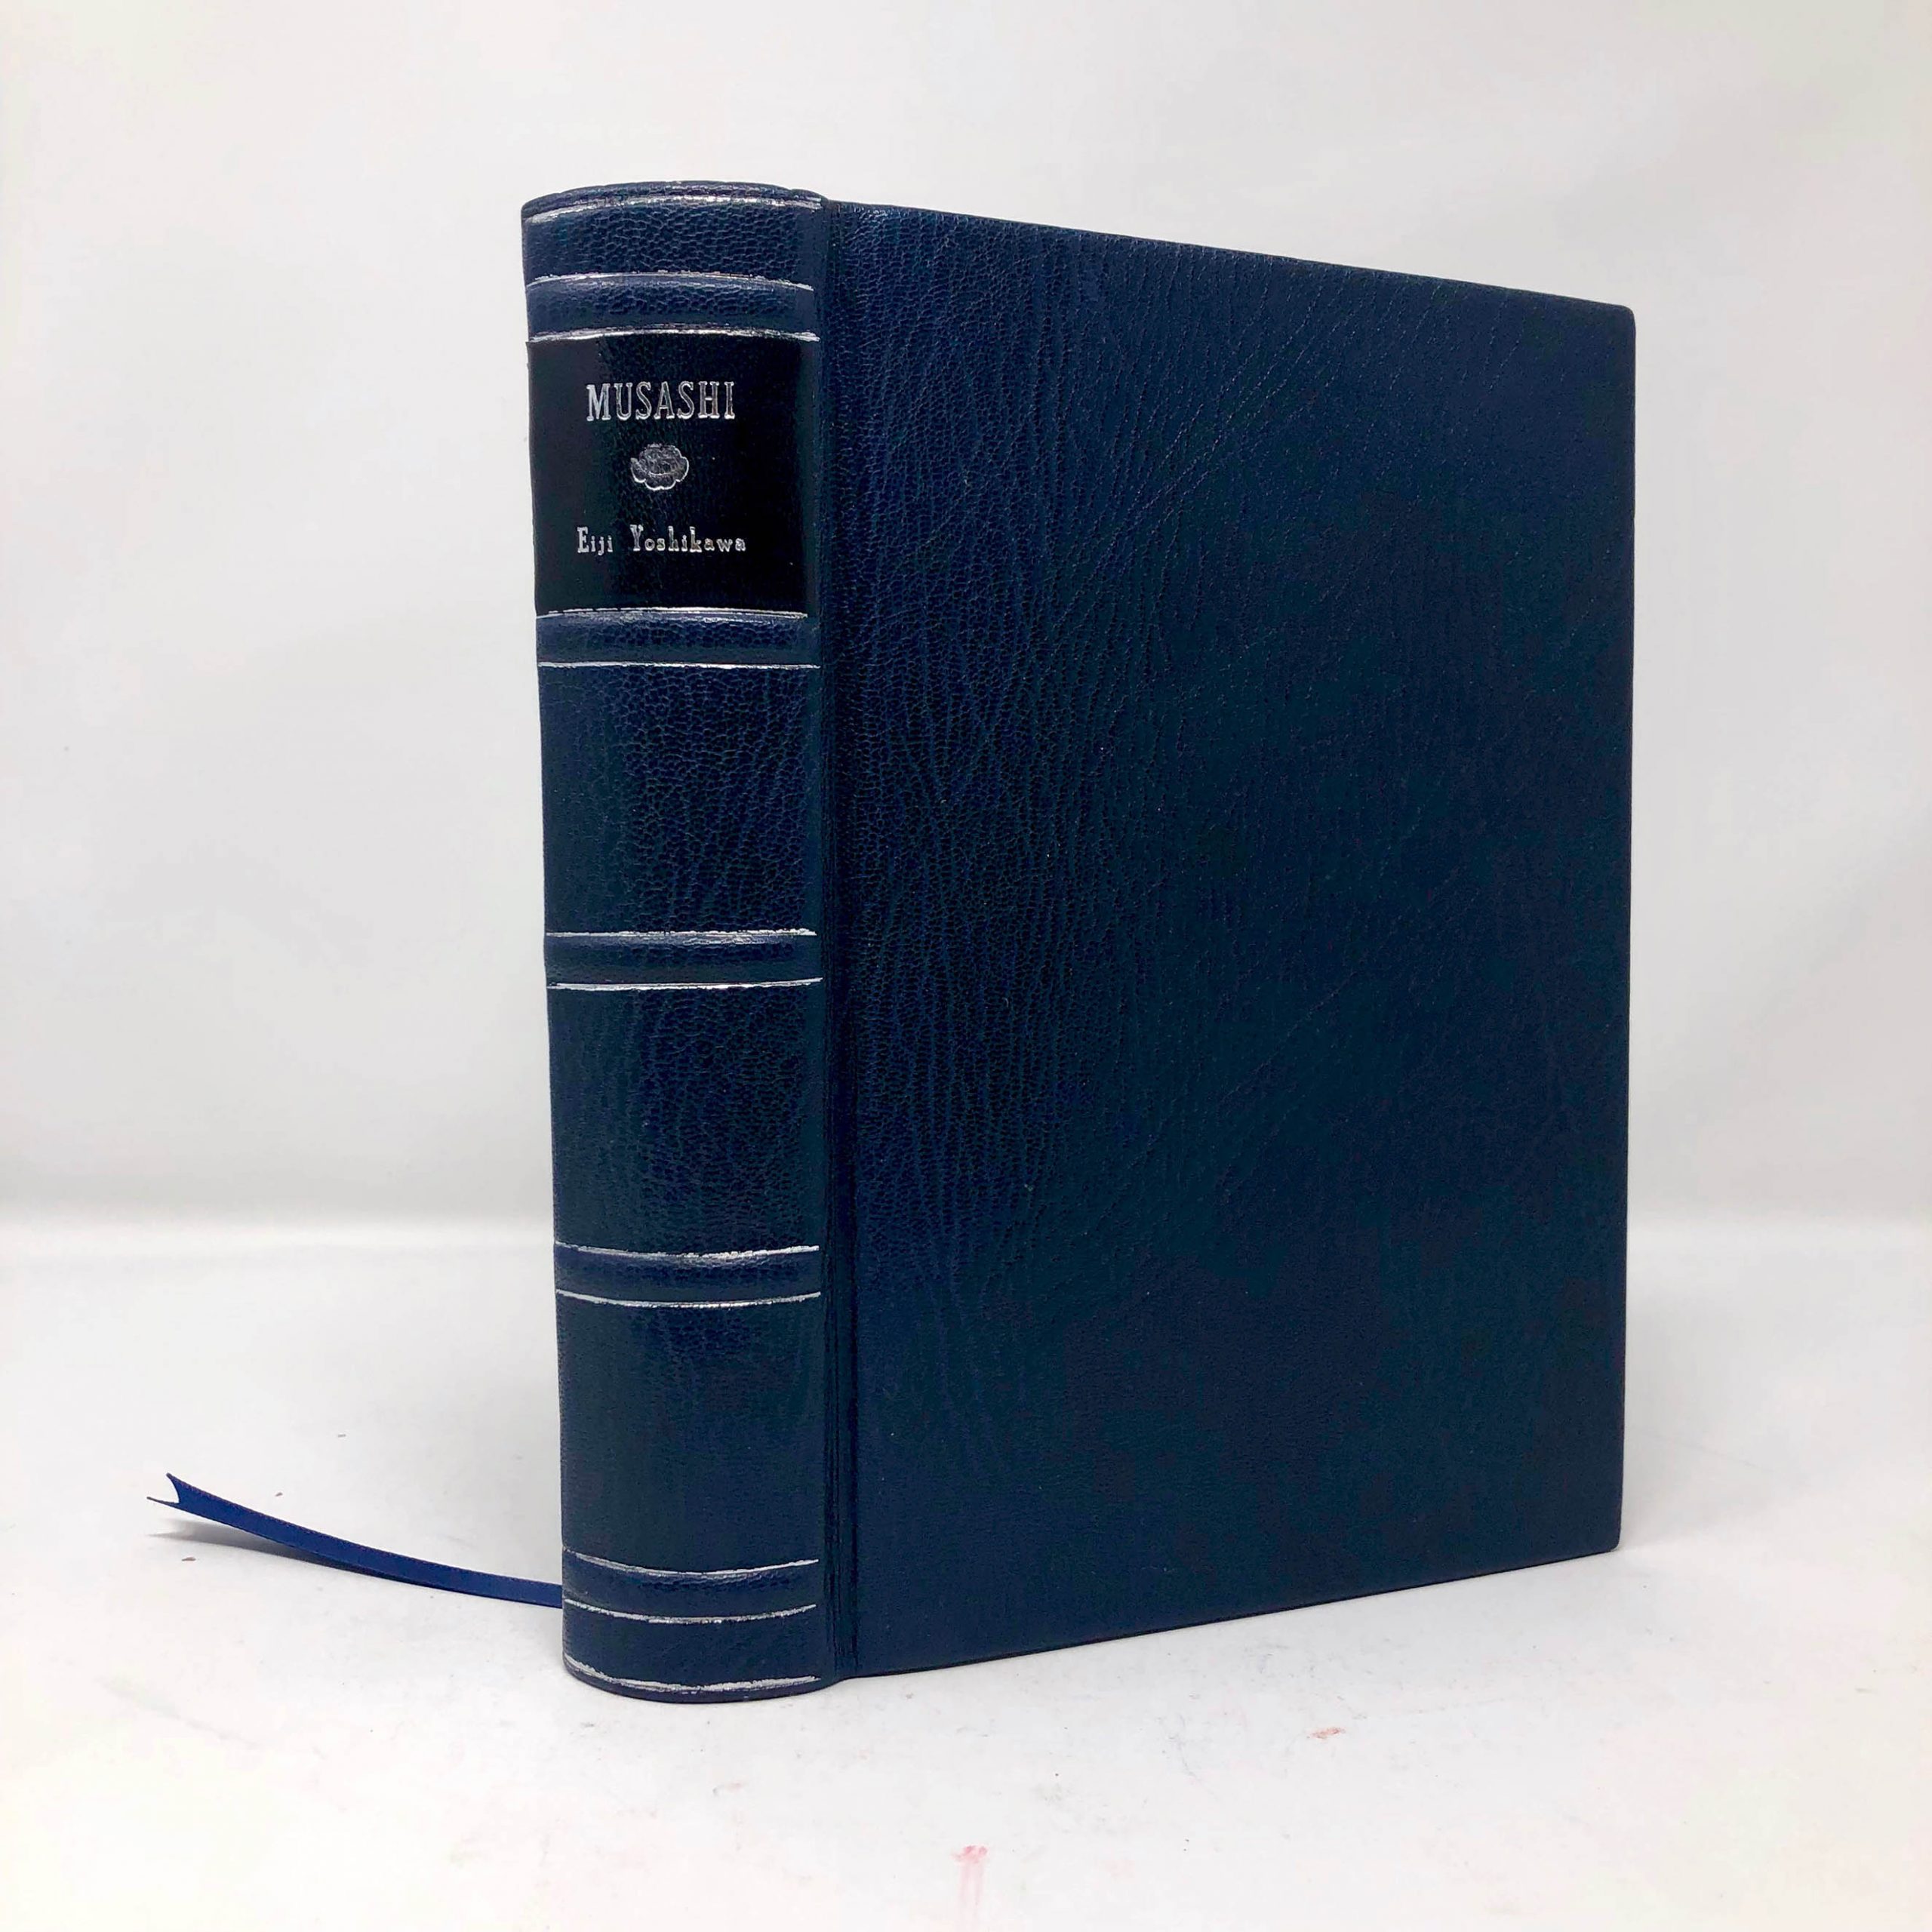 Musashi | Eiji Yoshikawa
Custom Leather Book
Boston Harbor Bookbindery